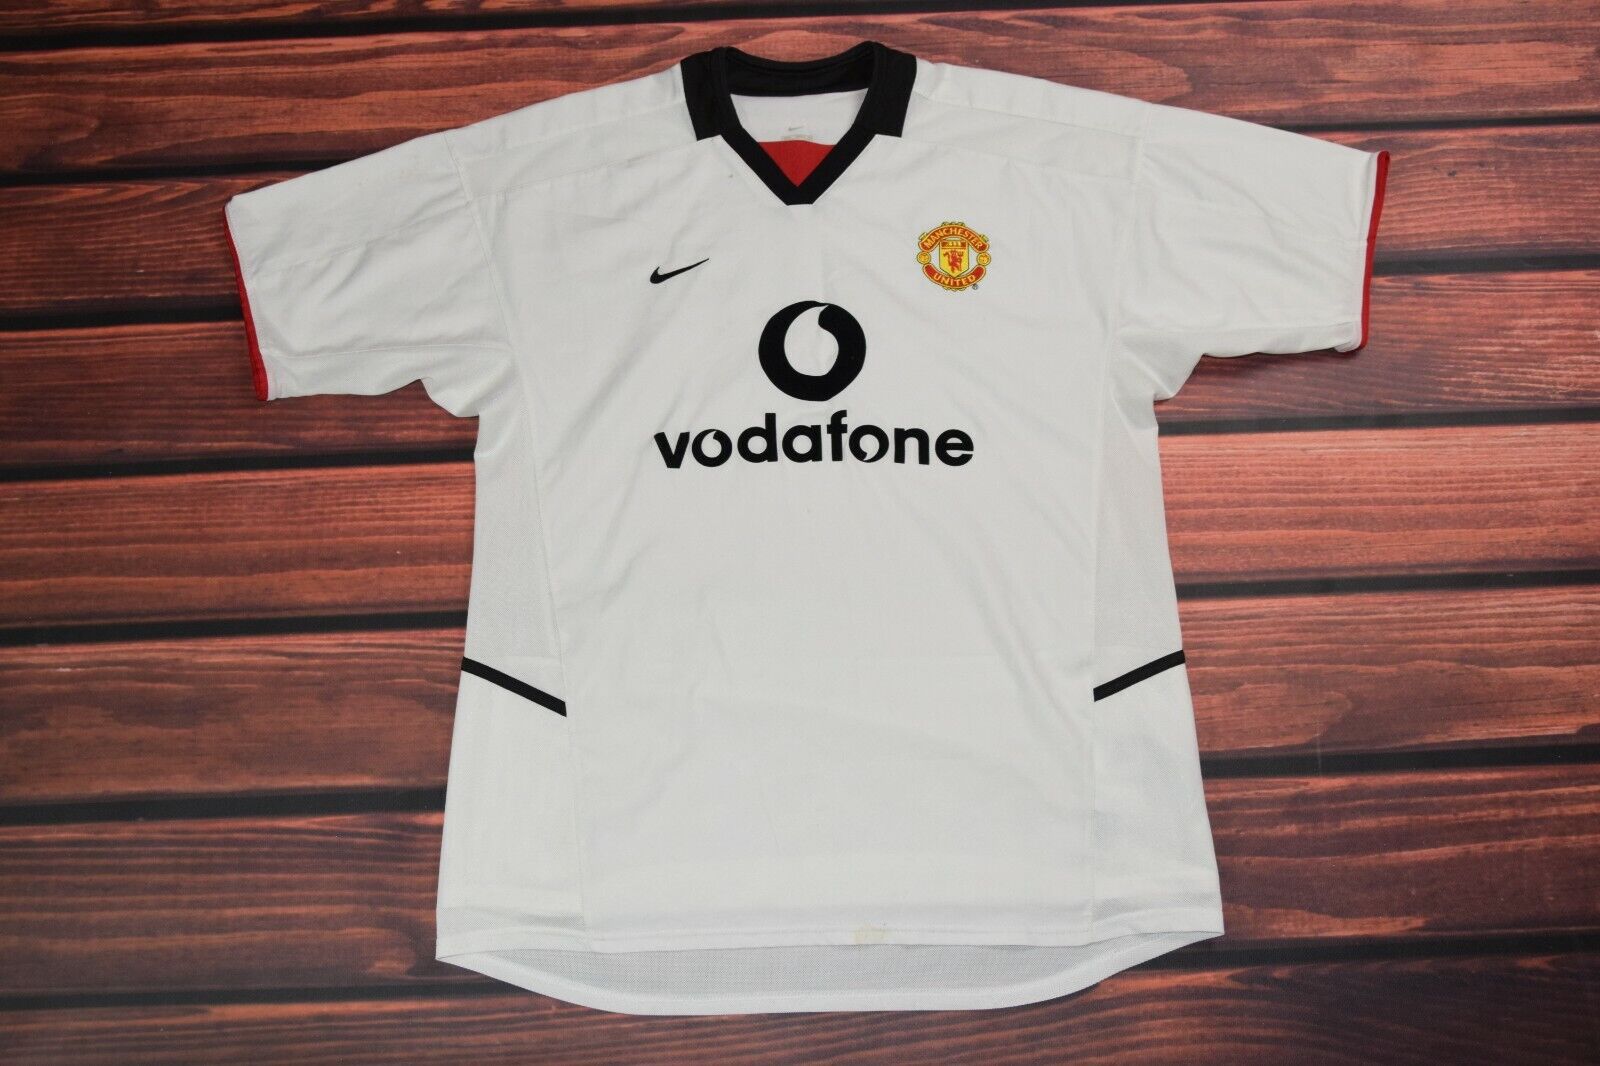 manchester nike jersey white shirt vodafone kit 03 03 vintage size L large  men